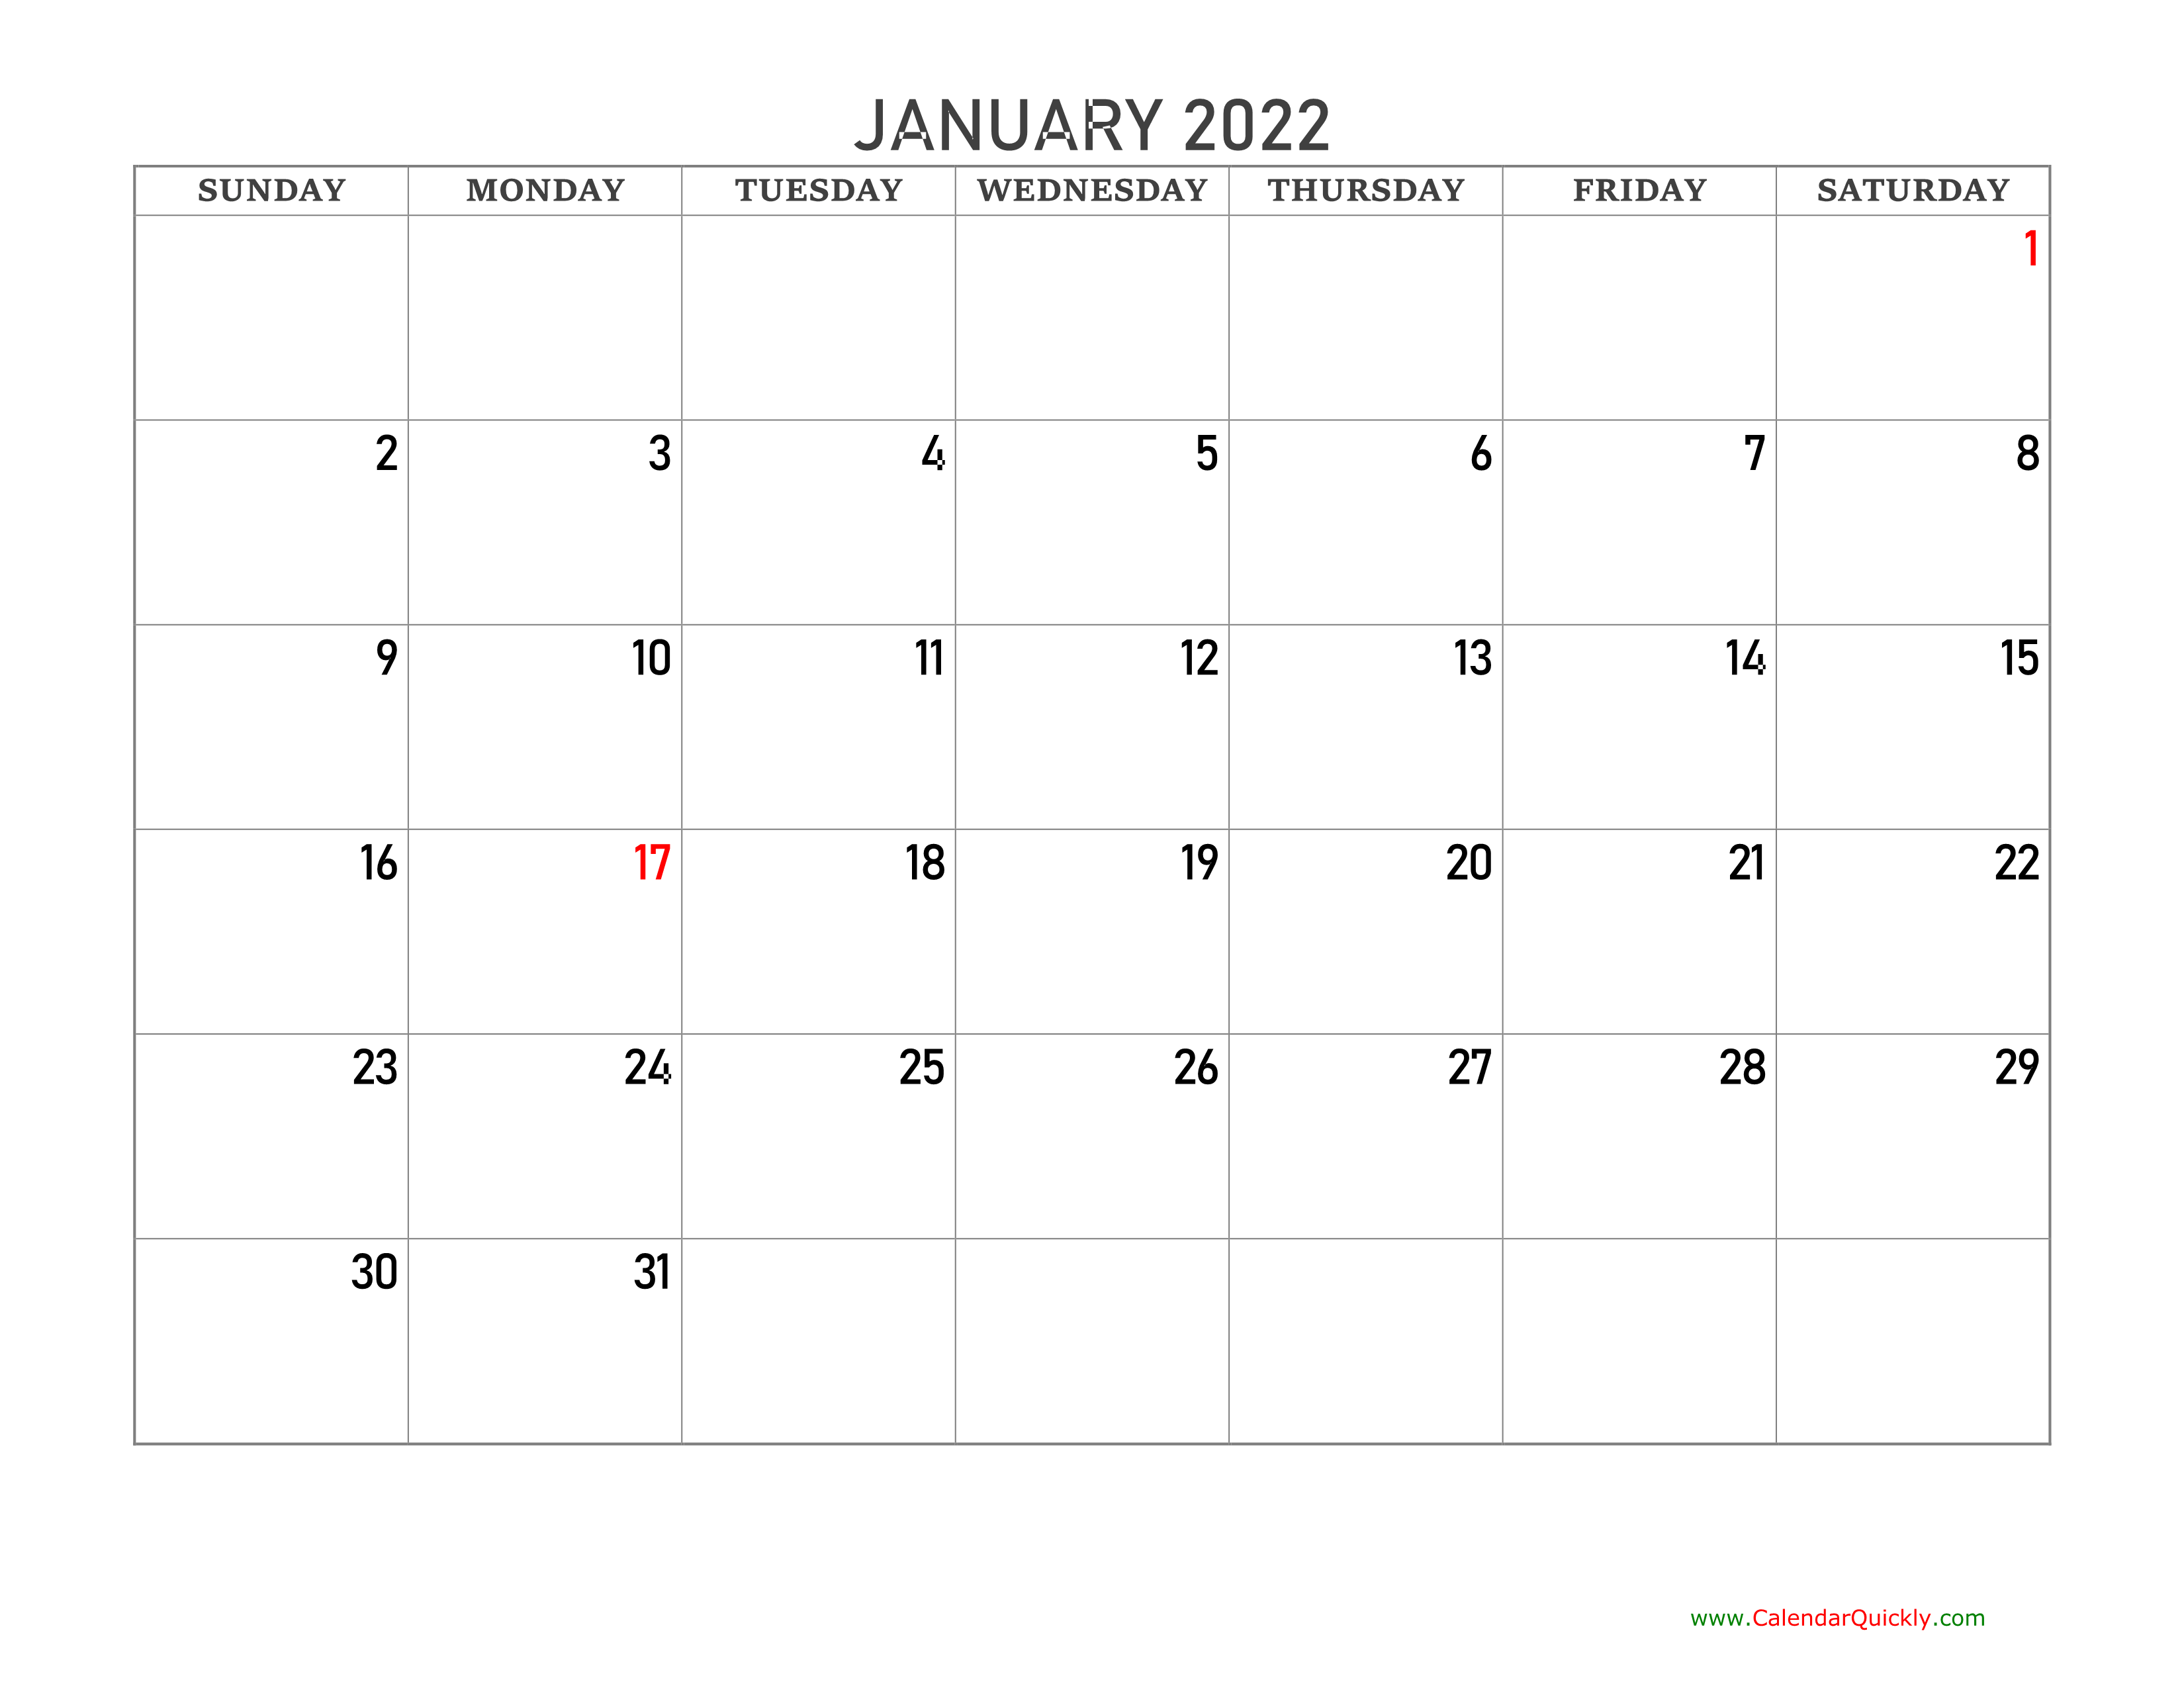 Monthly 2022 Blank Calendar Calendar Quickly